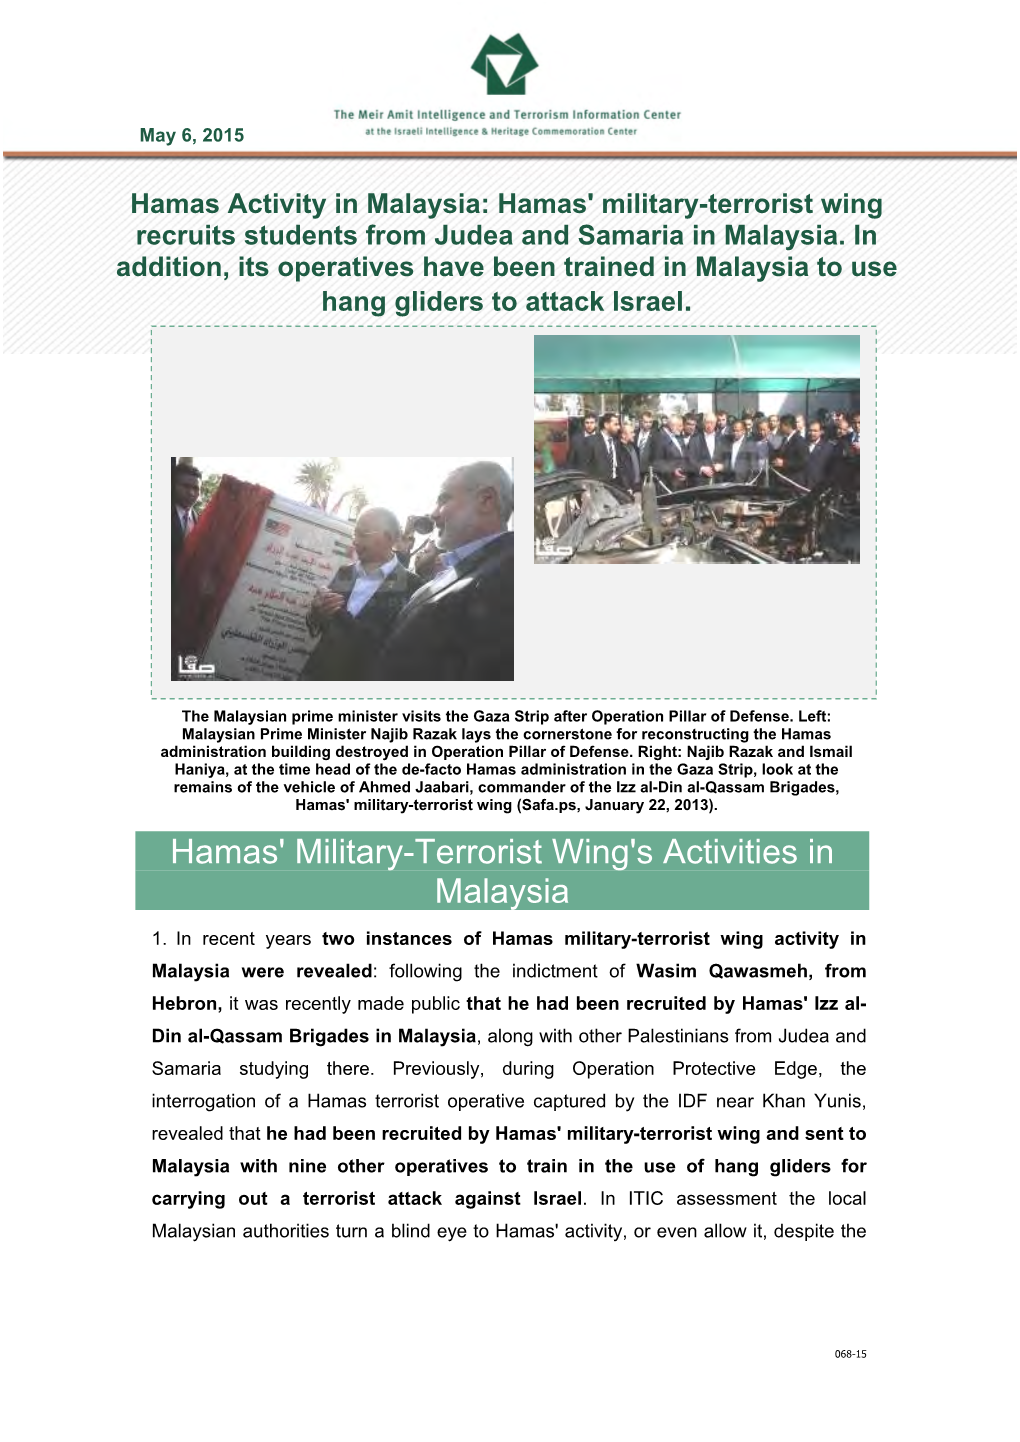 Hamas' Military-Terrorist Wing's Activities in Malaysia